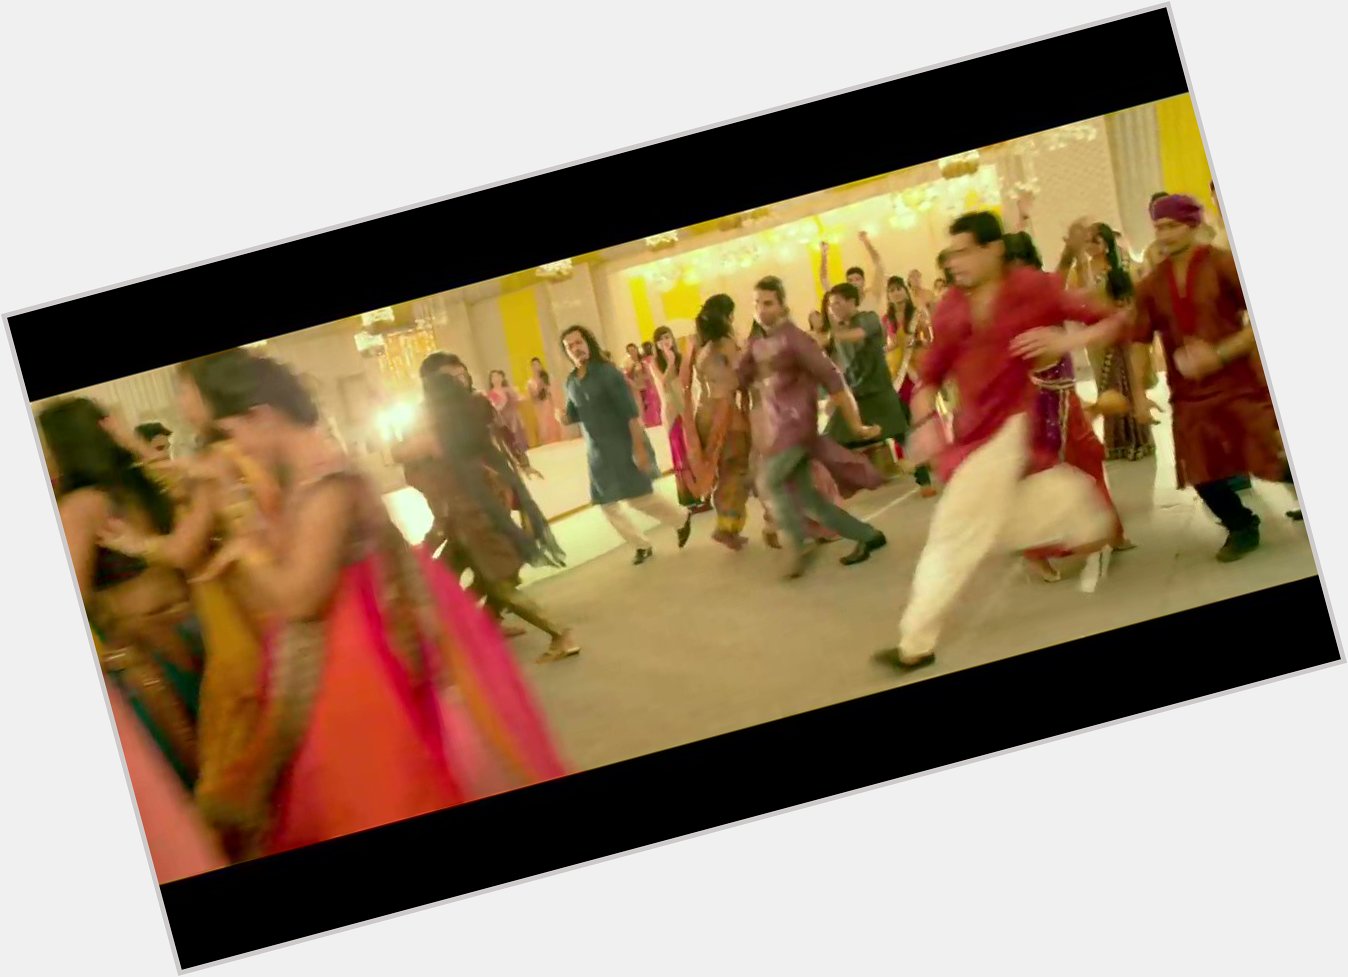 Punjabi Wedding Song - Parineeti Chopra - Siddharth Malhotra - Hasee Toh Phasee
Happy Birthday 